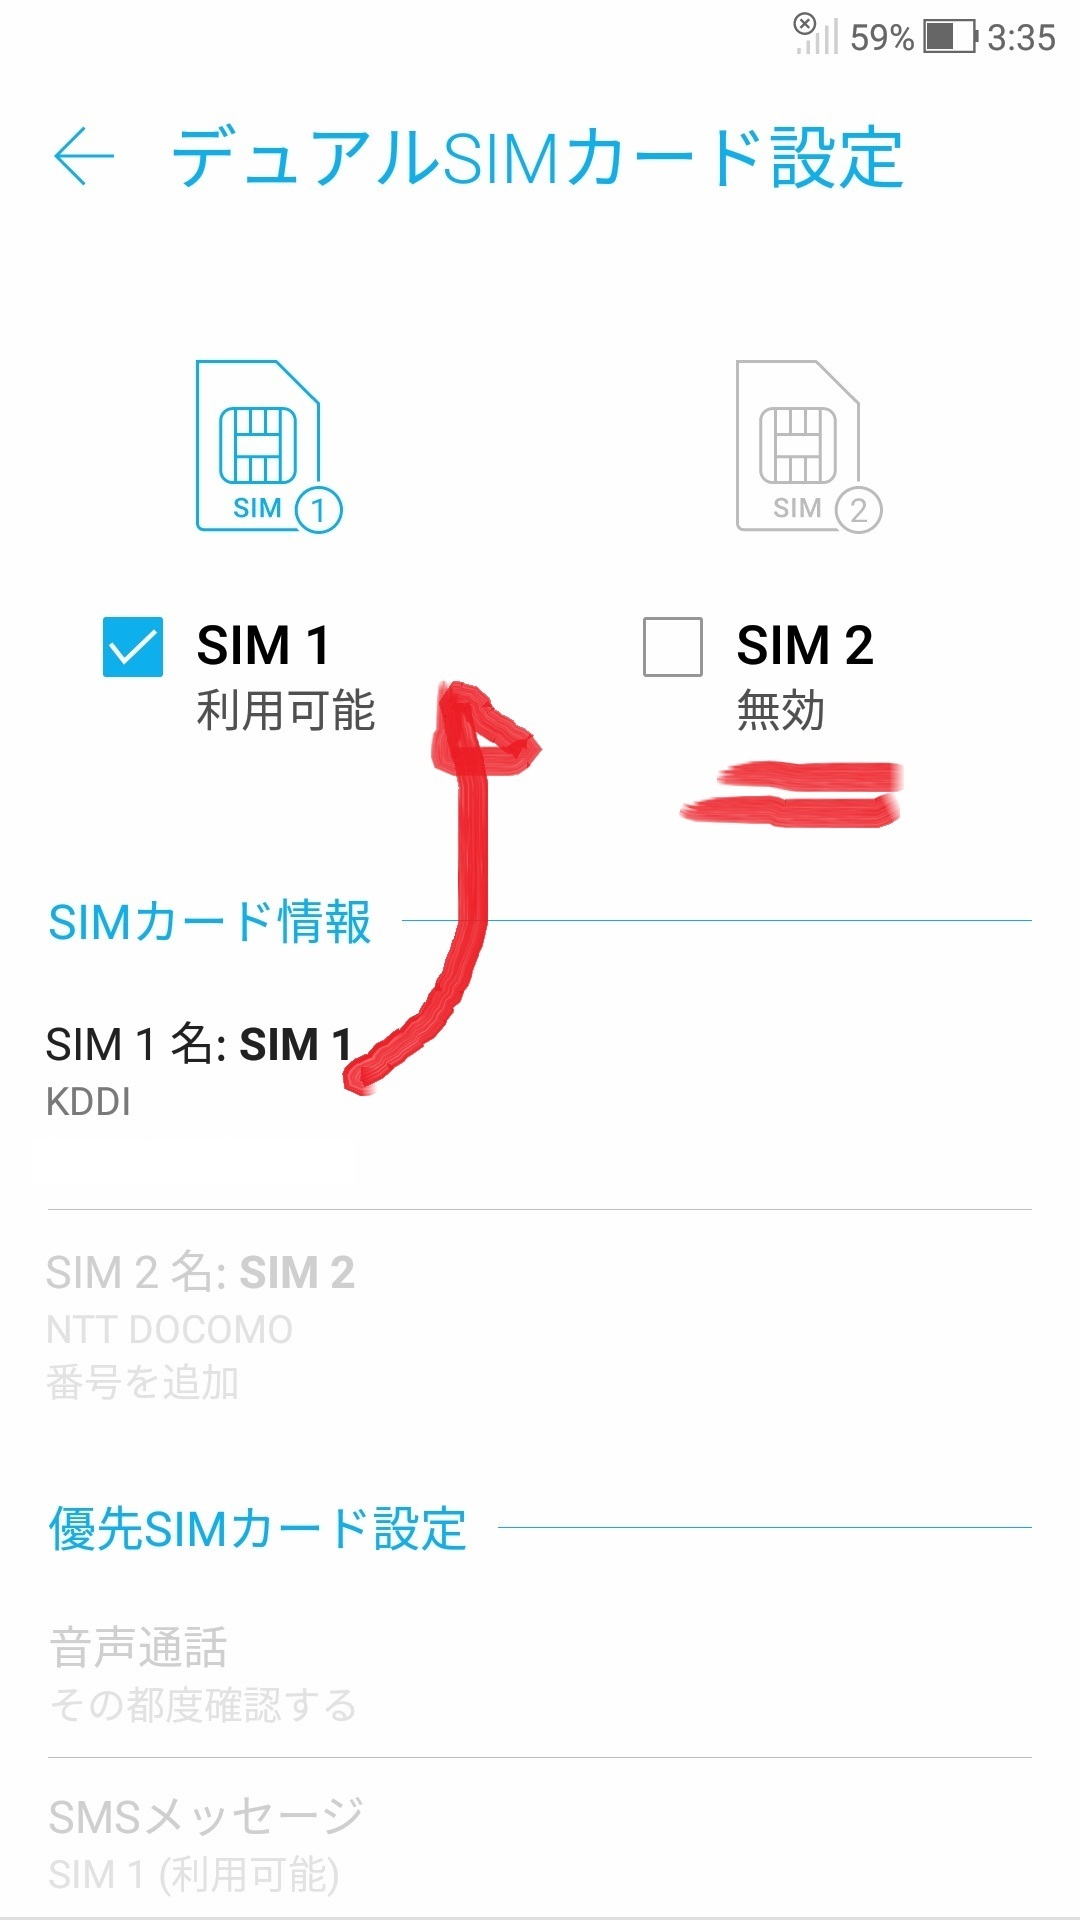 SIM_dual_card_2_line_aeon_mobile_3.jpg